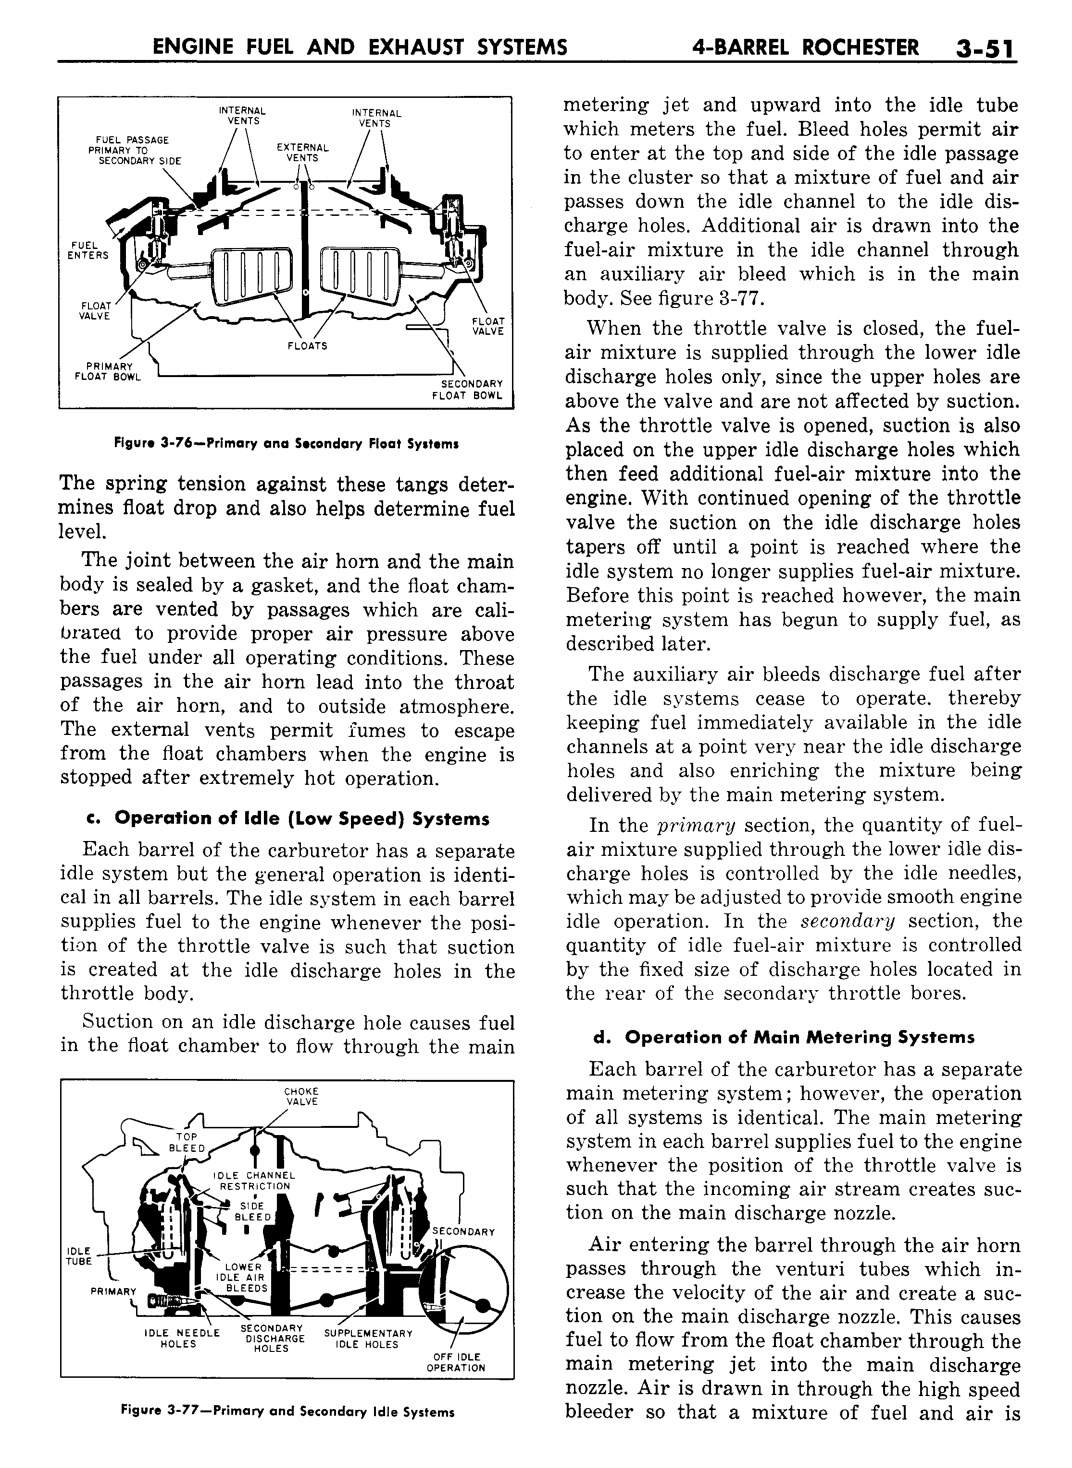 n_04 1957 Buick Shop Manual - Engine Fuel & Exhaust-051-051.jpg